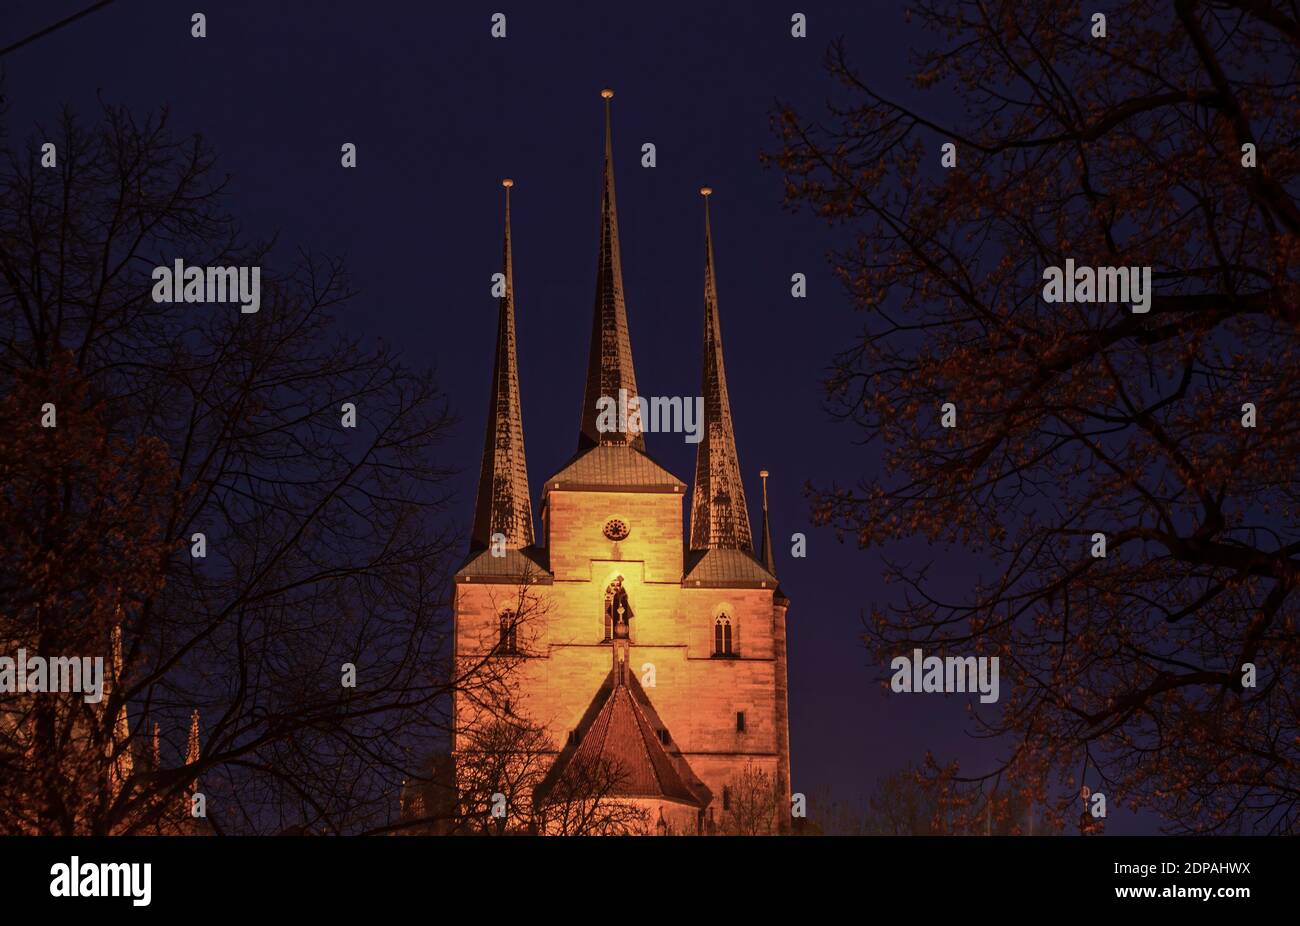 Severikirche am Domberg, Erfurt, Thuringia, Germany  /  Severikirche am Domberg, Erfurt, Thüringen, Deutschland Stock Photo